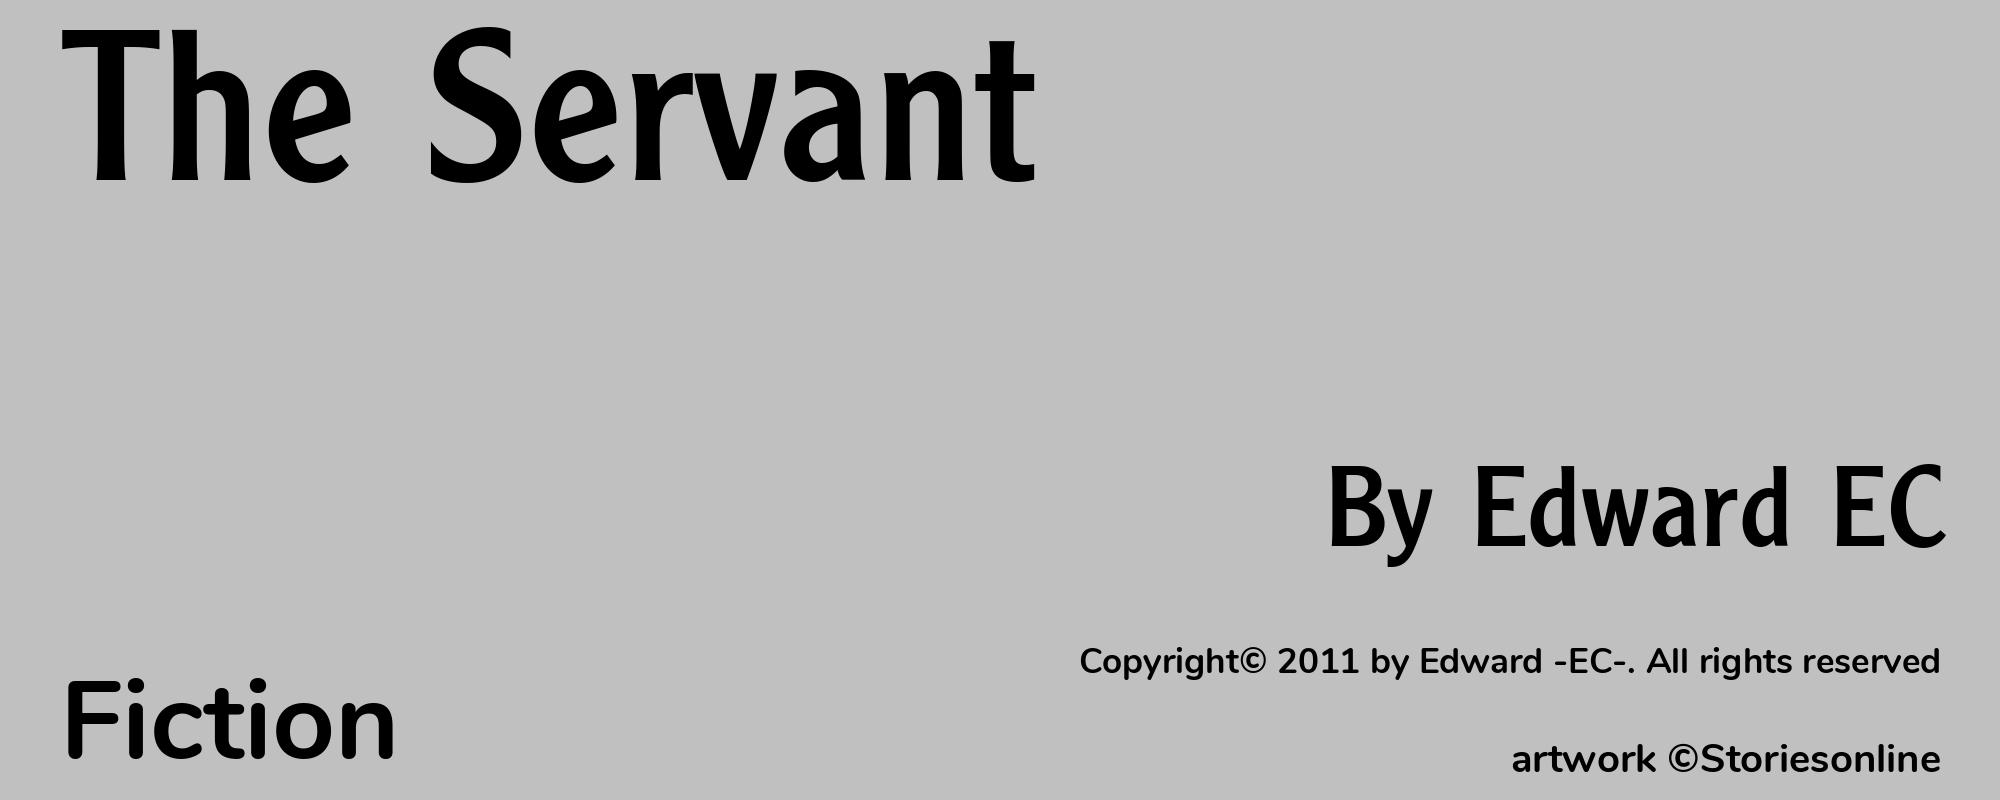 The Servant - Cover